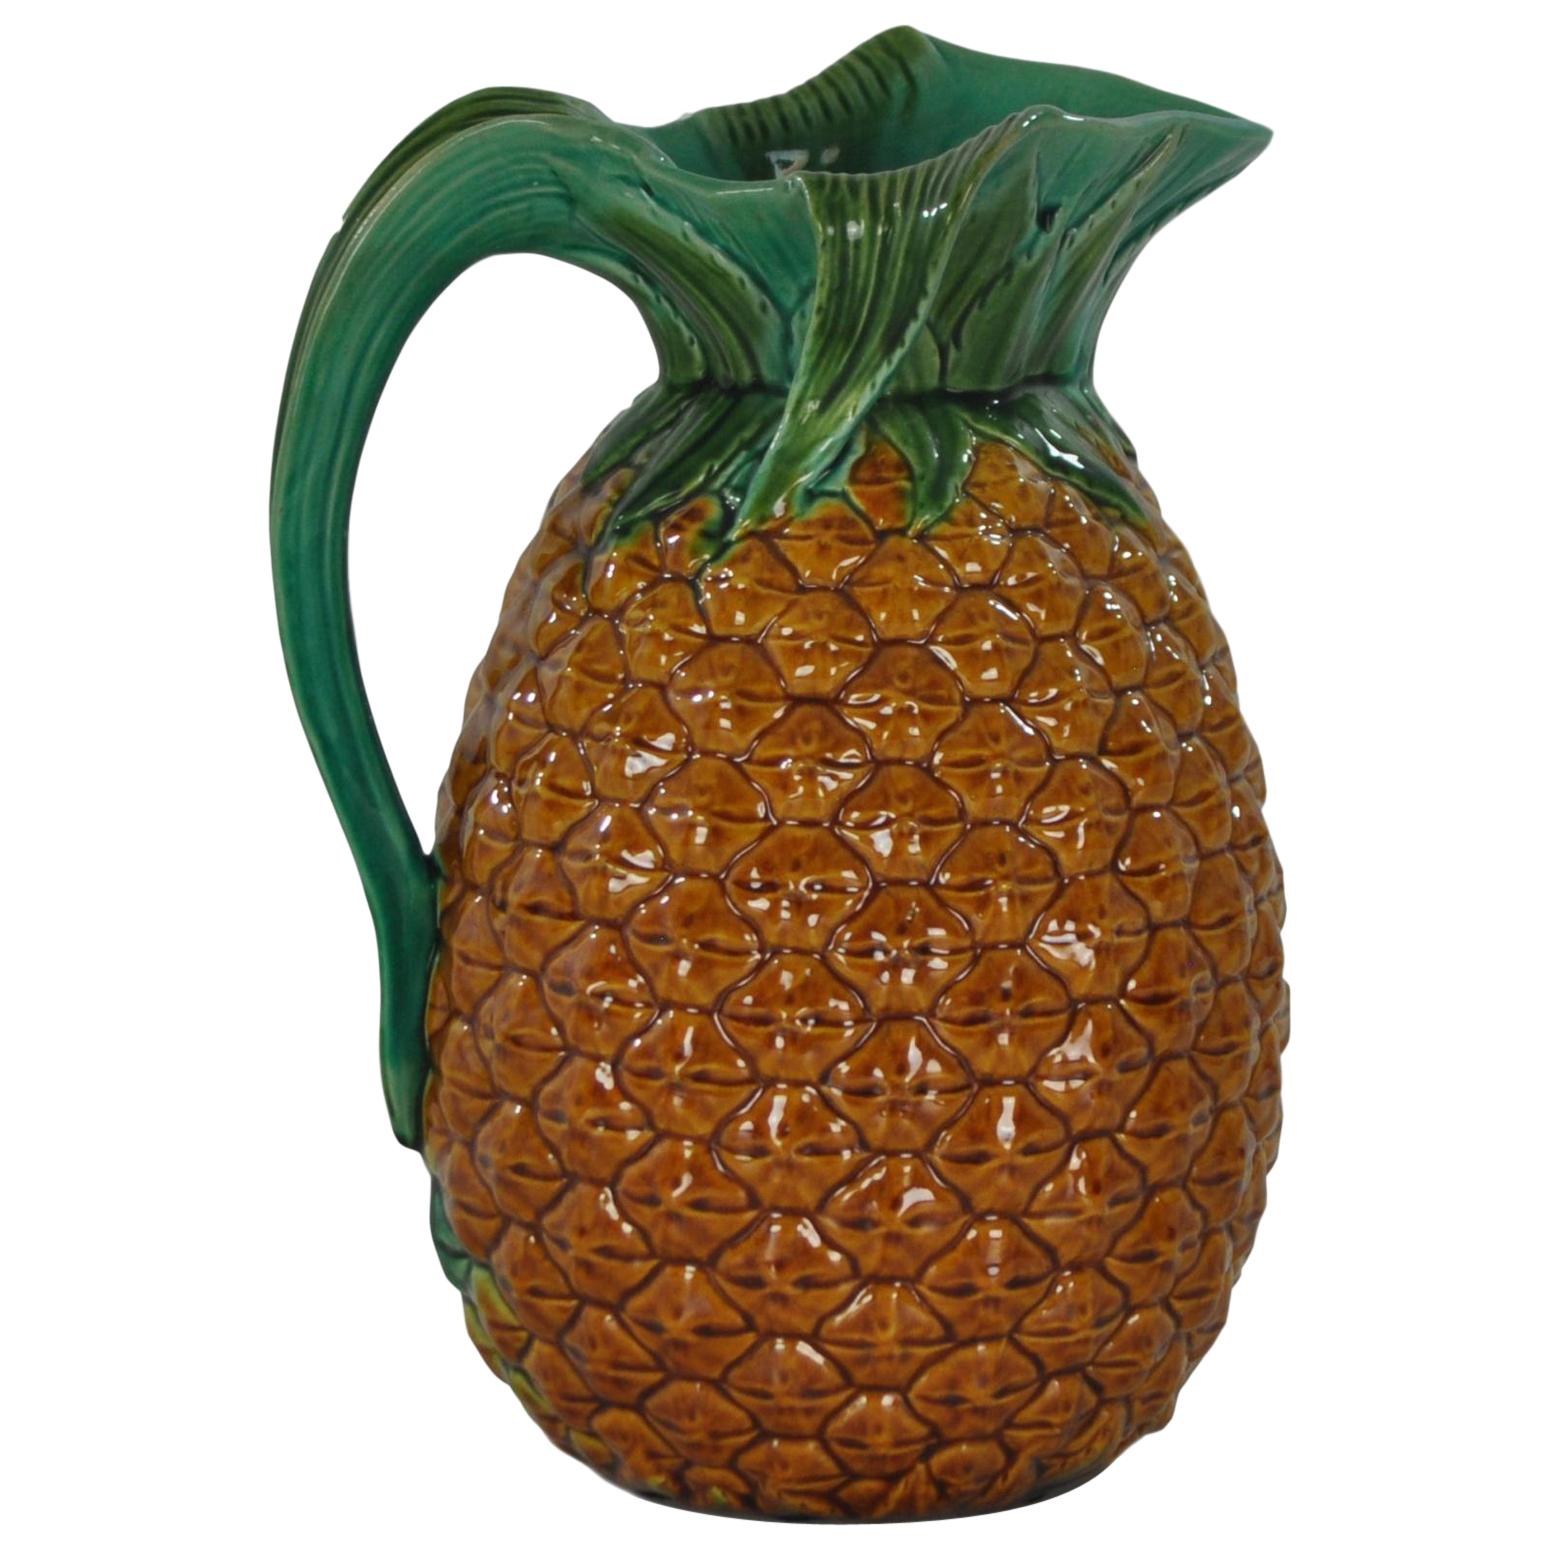 Minton Majolica Pineapple Jug pitcher, English, ca. 1853